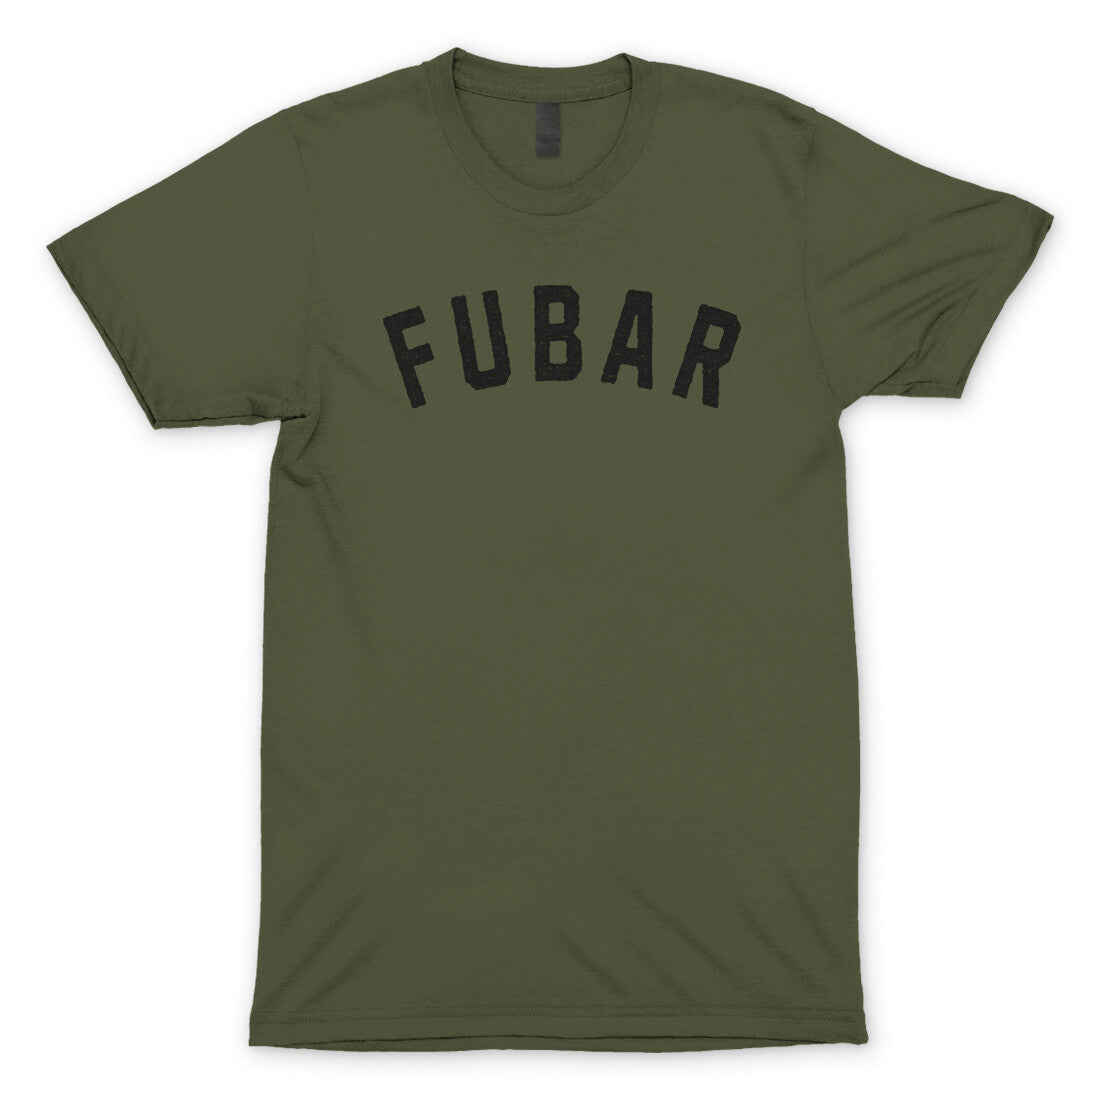 Fubar in Military Green Color